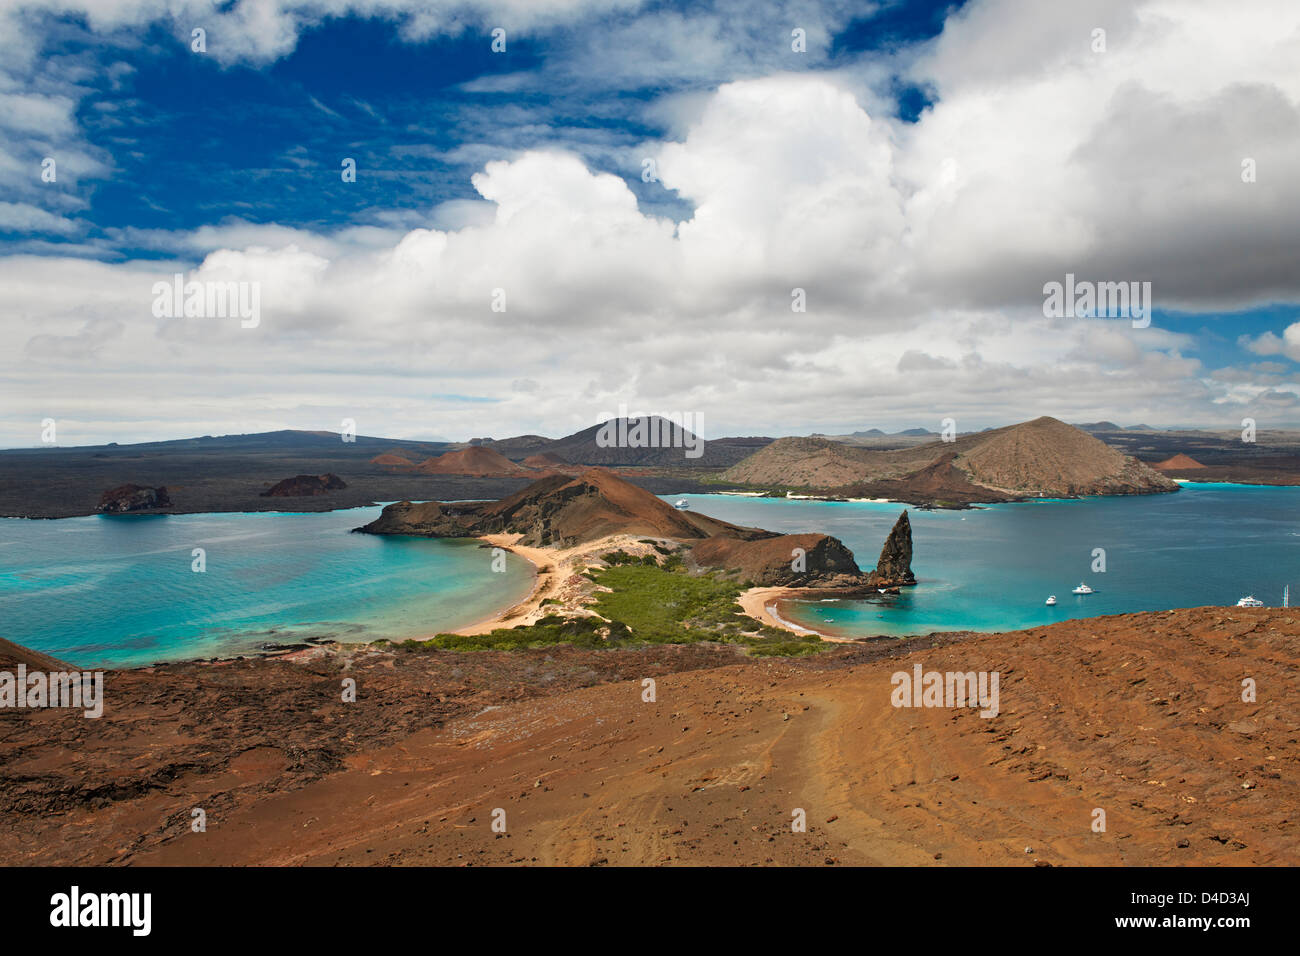 Bartolome Isla Galápagos Isalnds, Ecuador, América del Sur, América Foto de stock